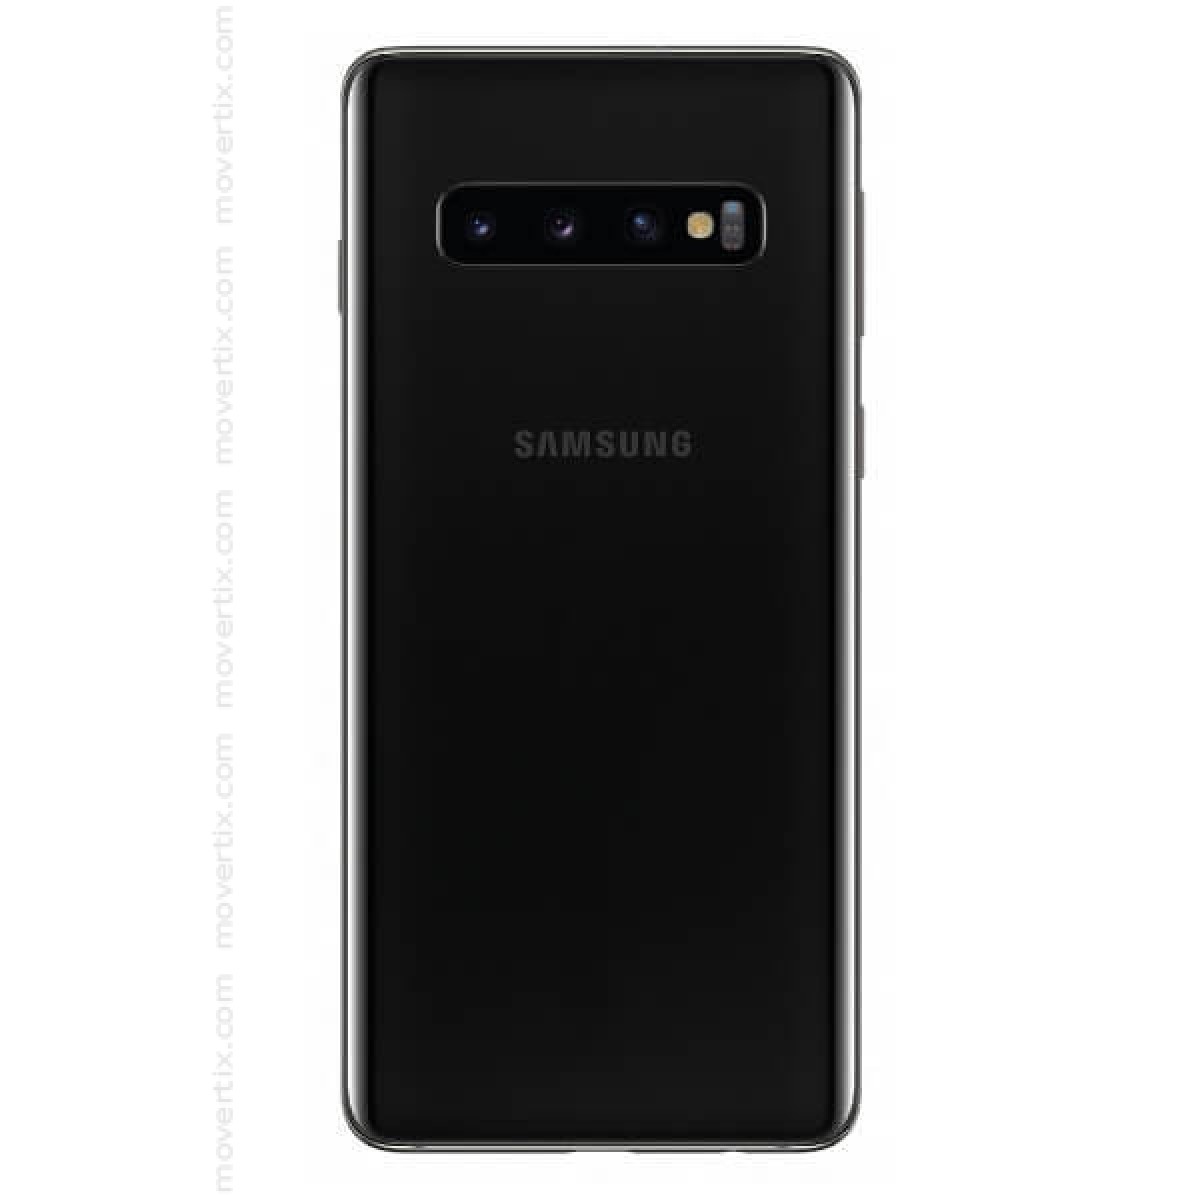 Samsung Galaxy S10 Plus Dual Sim Prism Black 128gb And 8gb Ram